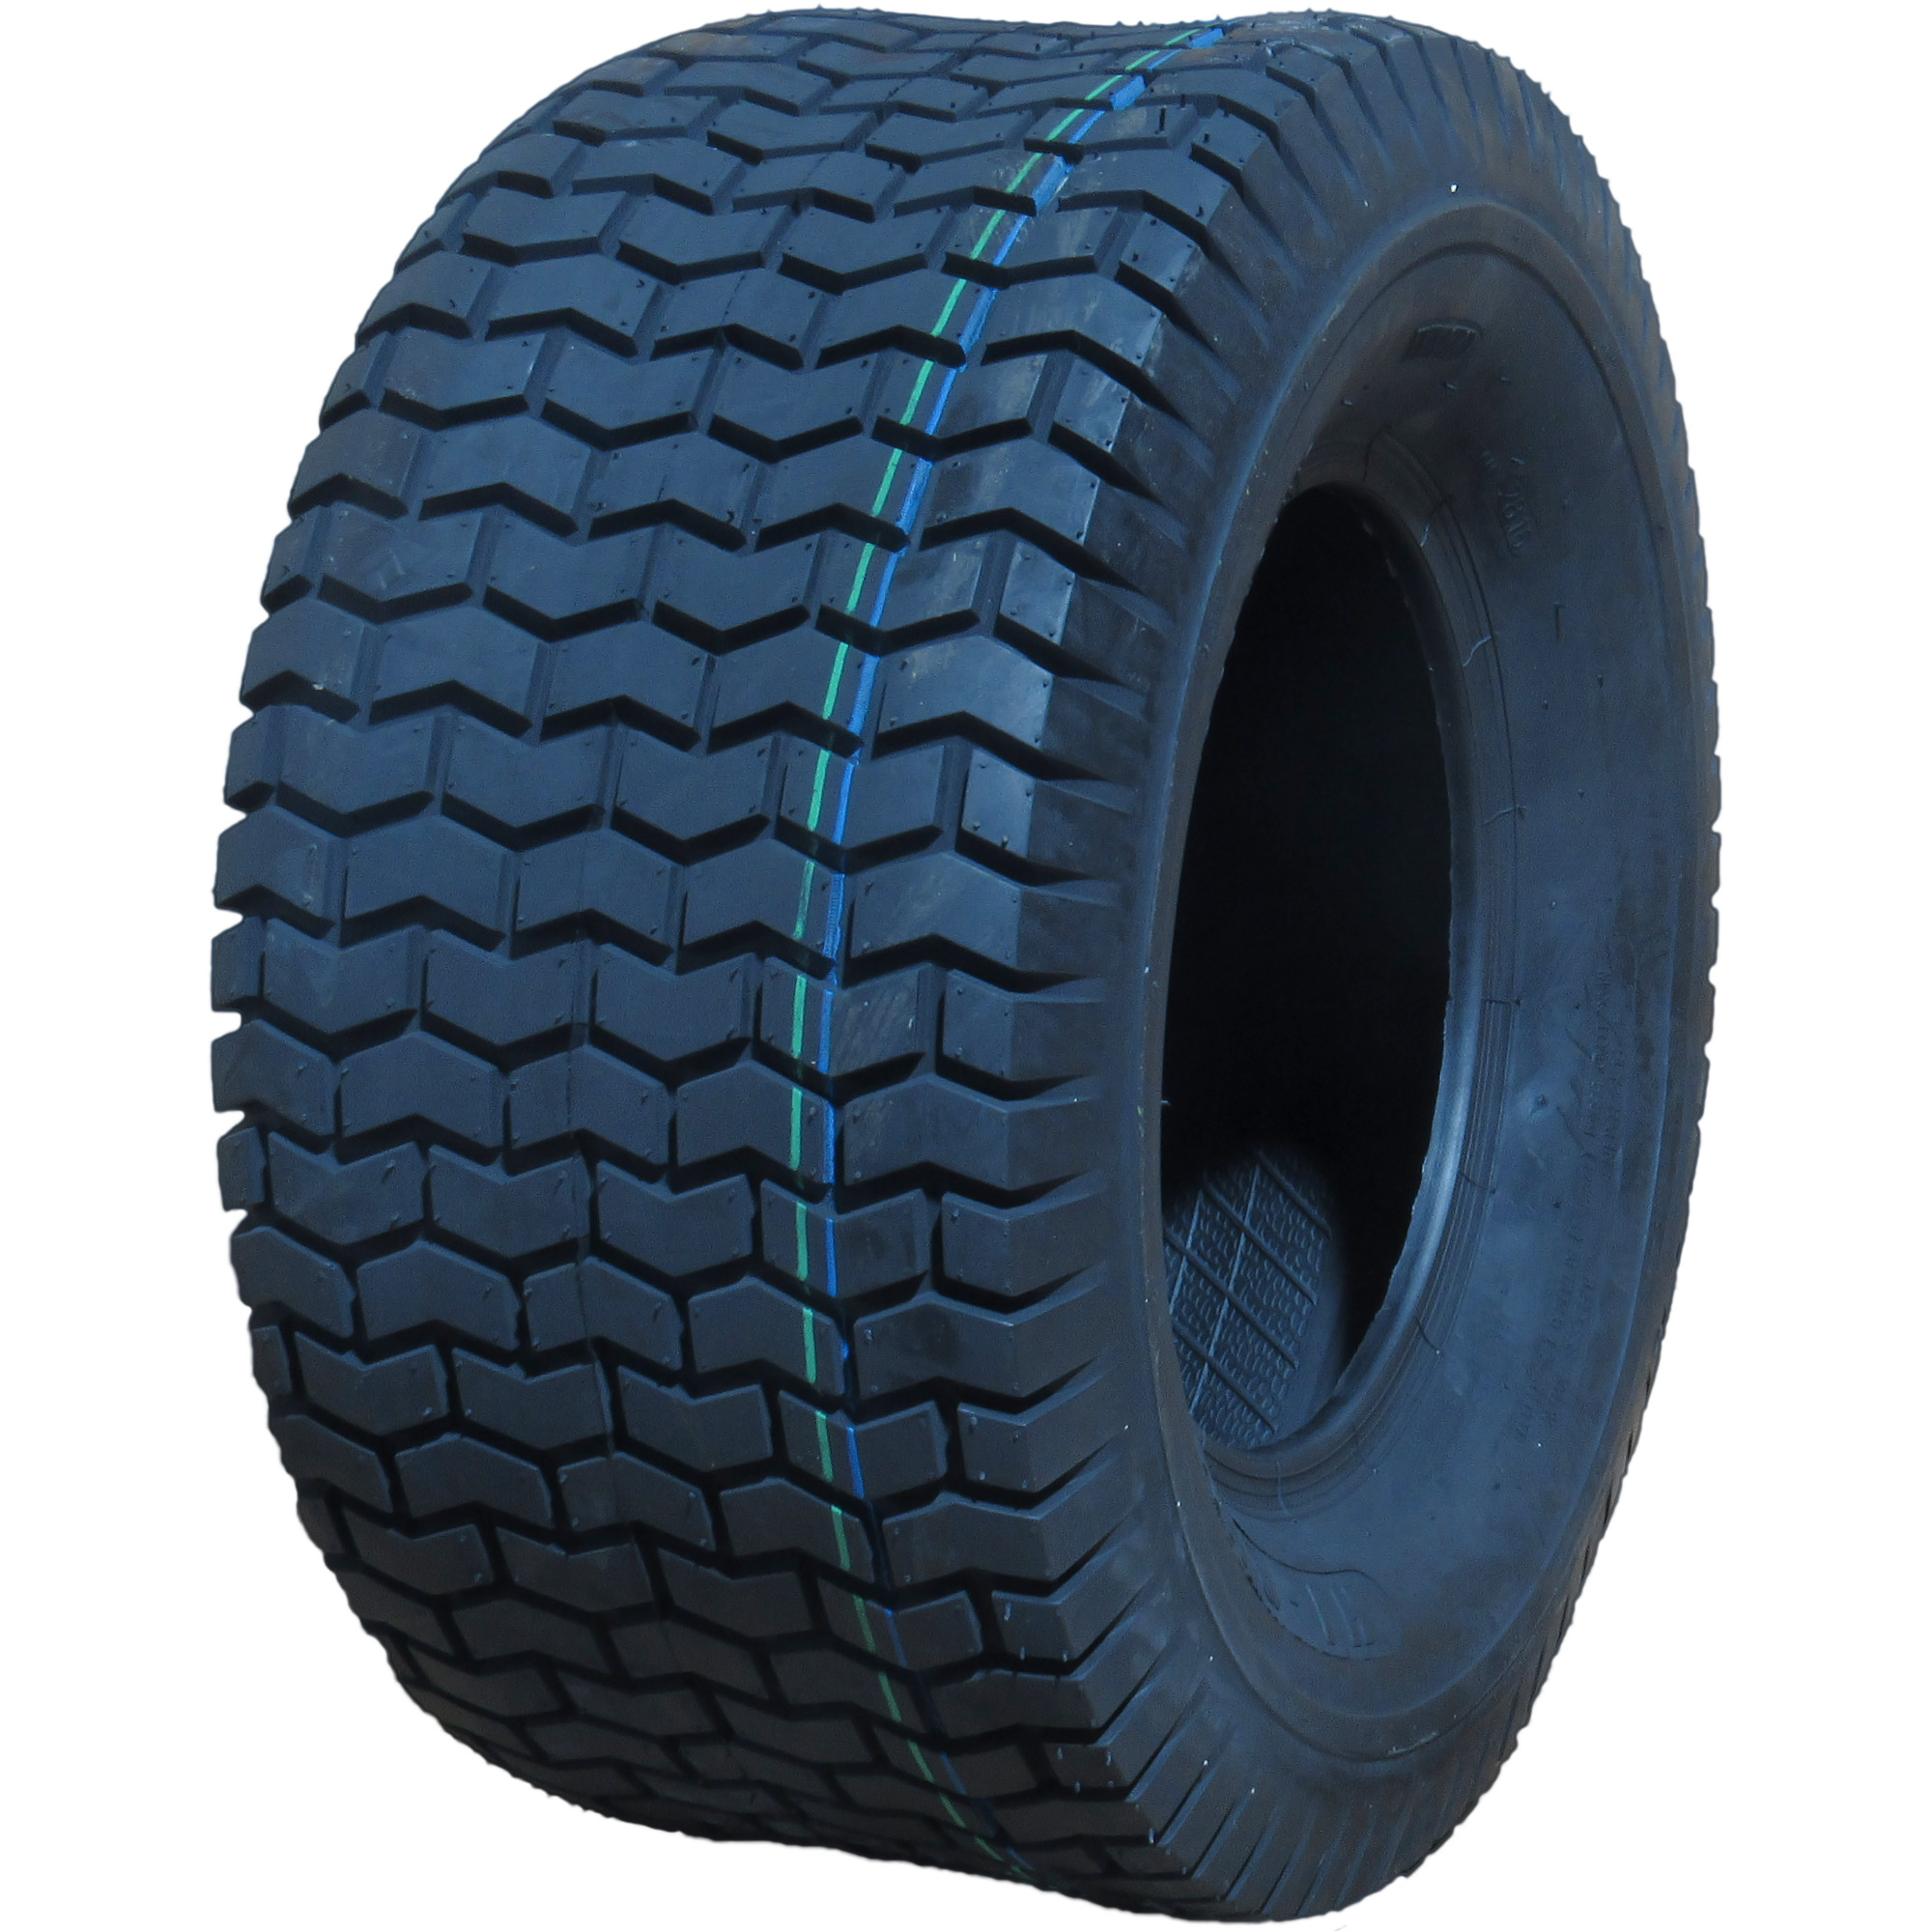 HI-RUN, Lawn Garden Tire, SU12 Turf II, Tire Size 20X10-10 Load Range Rating B, Model WD1163